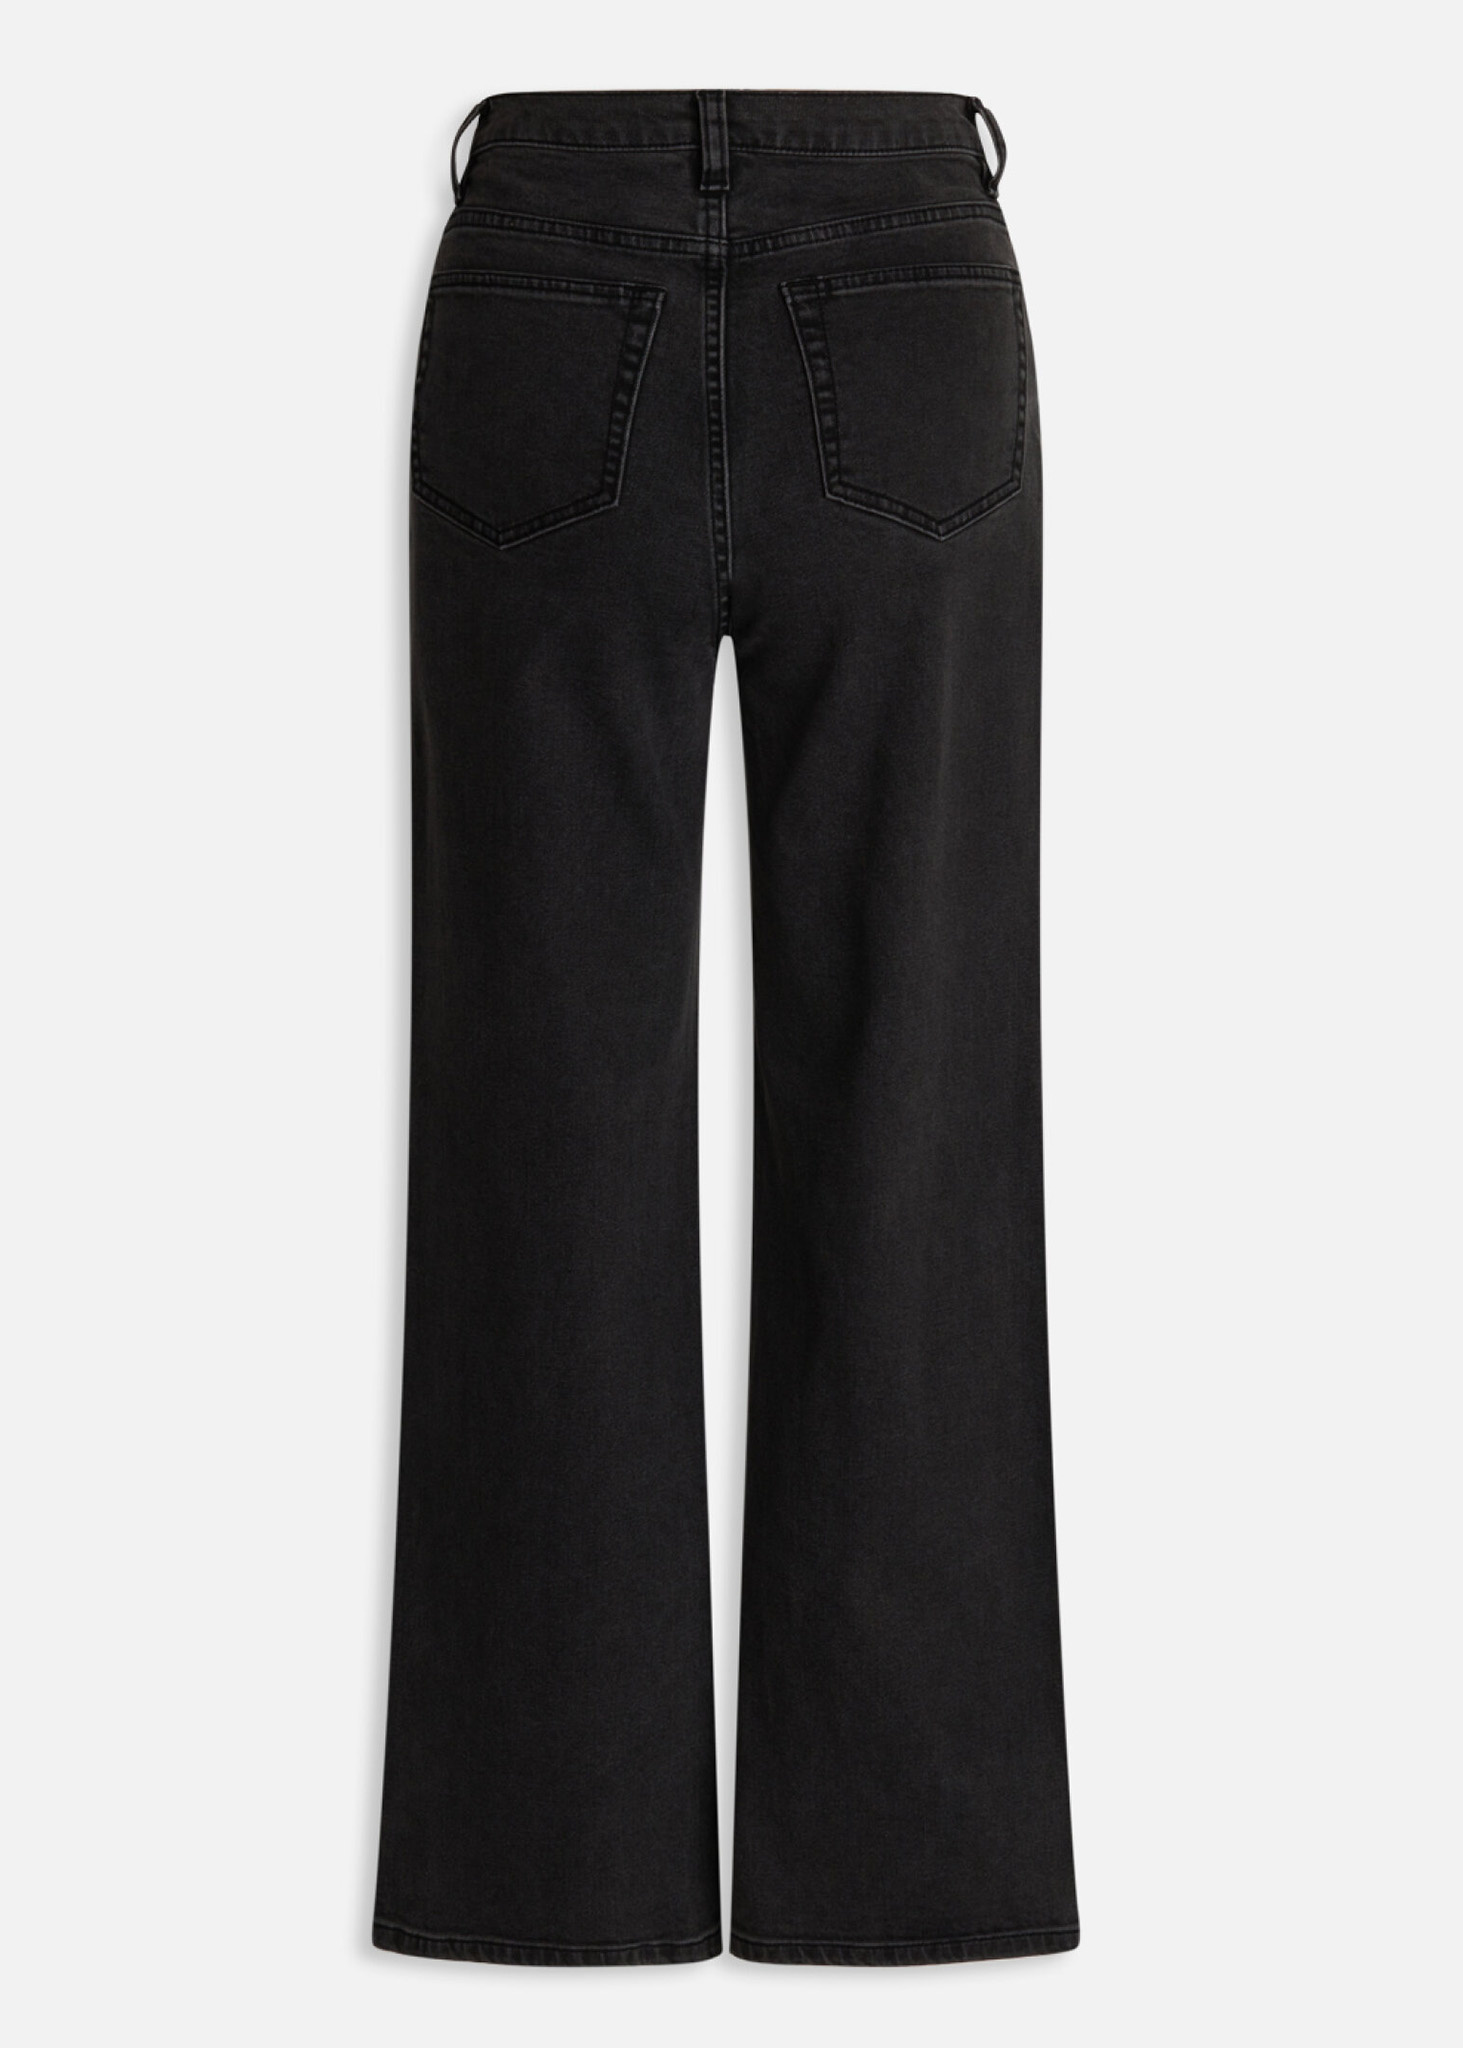 Black Wash Owi Jeans-2